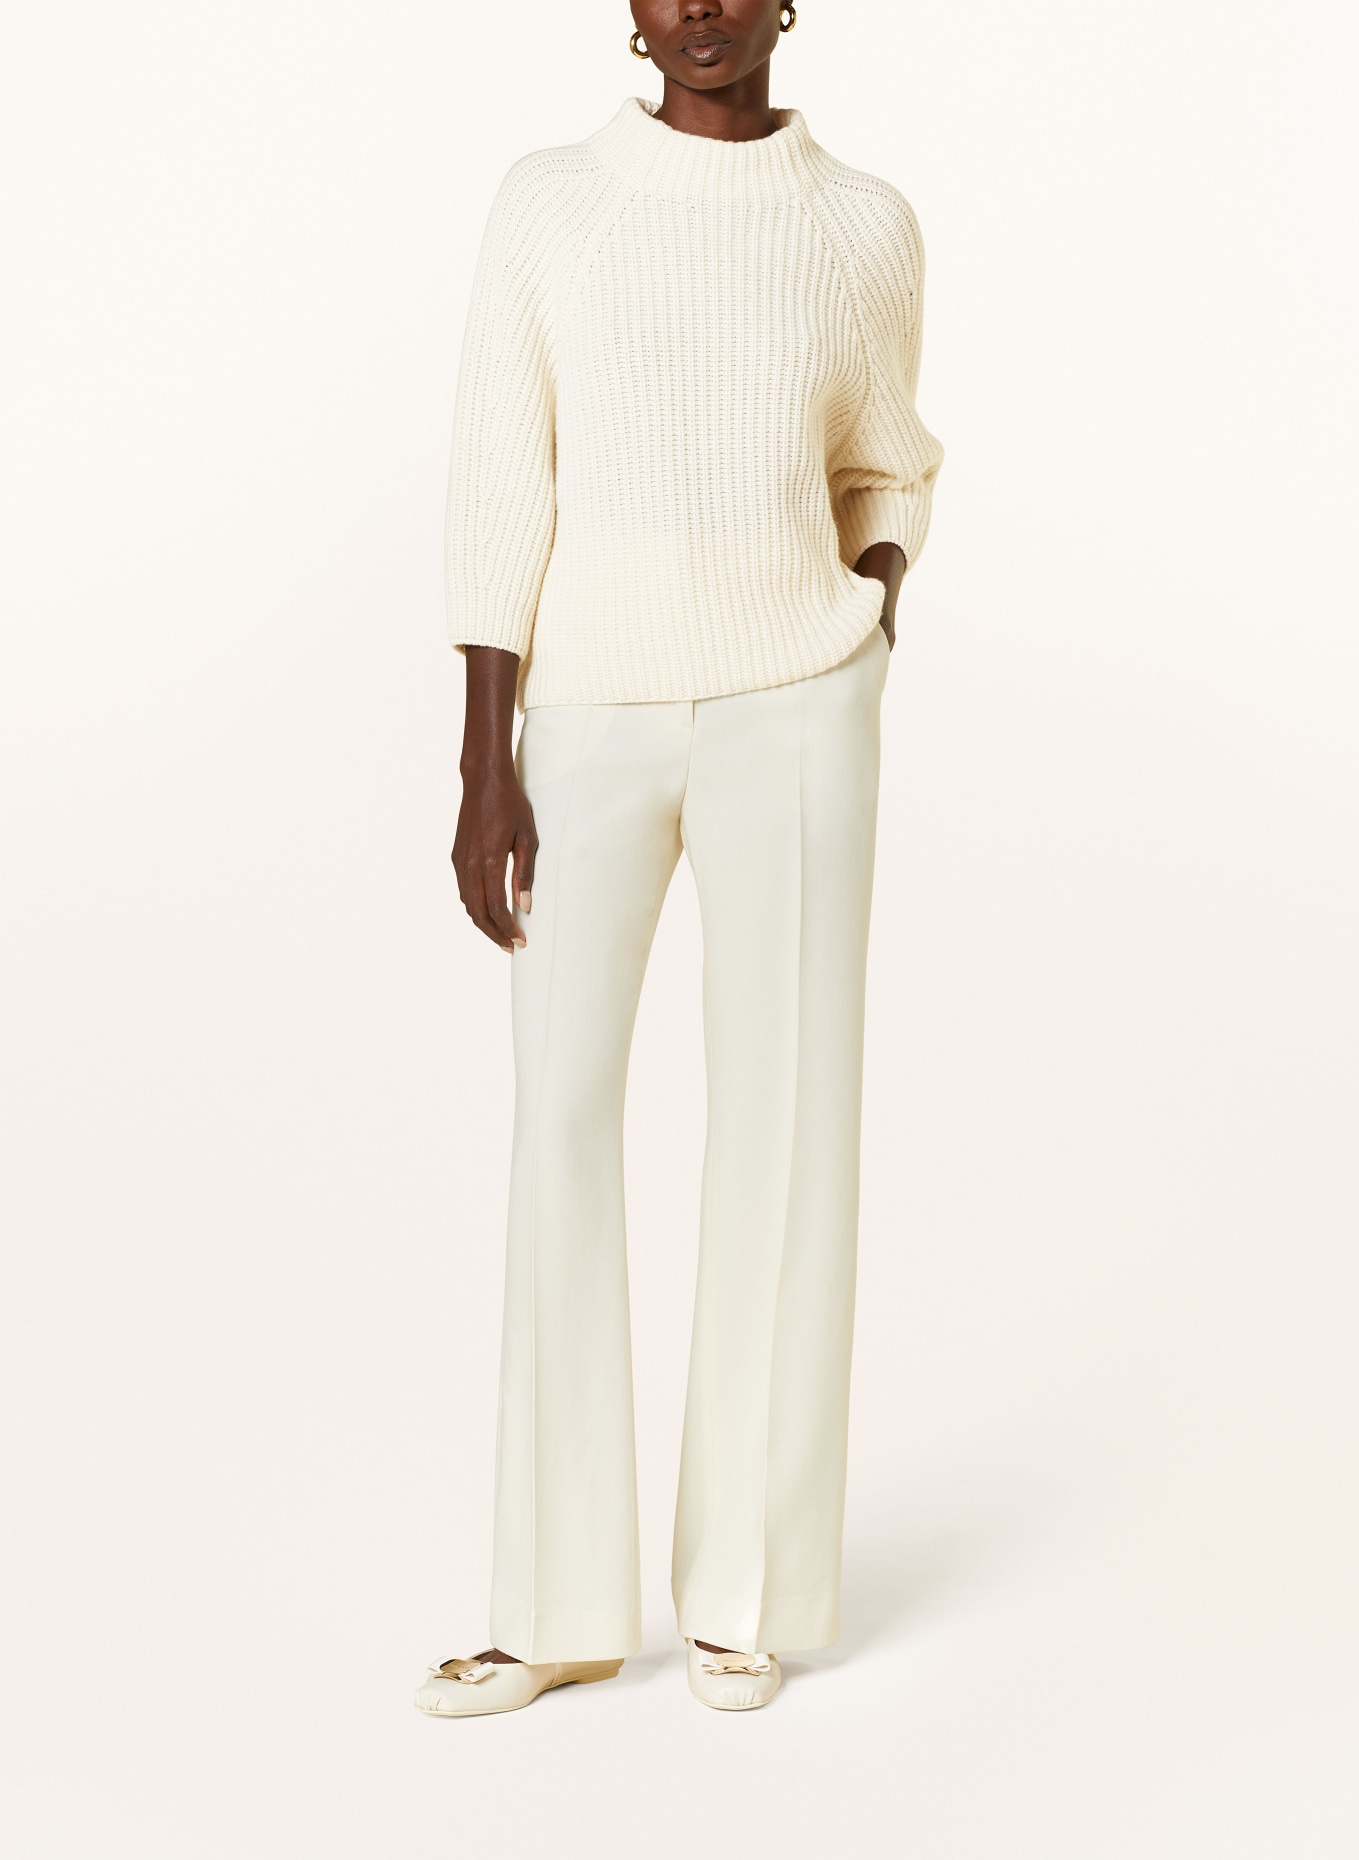 IRIS von ARNIM Cashmere sweater FALLOU with 3/4 sleeves, Color: ECRU (Image 2)